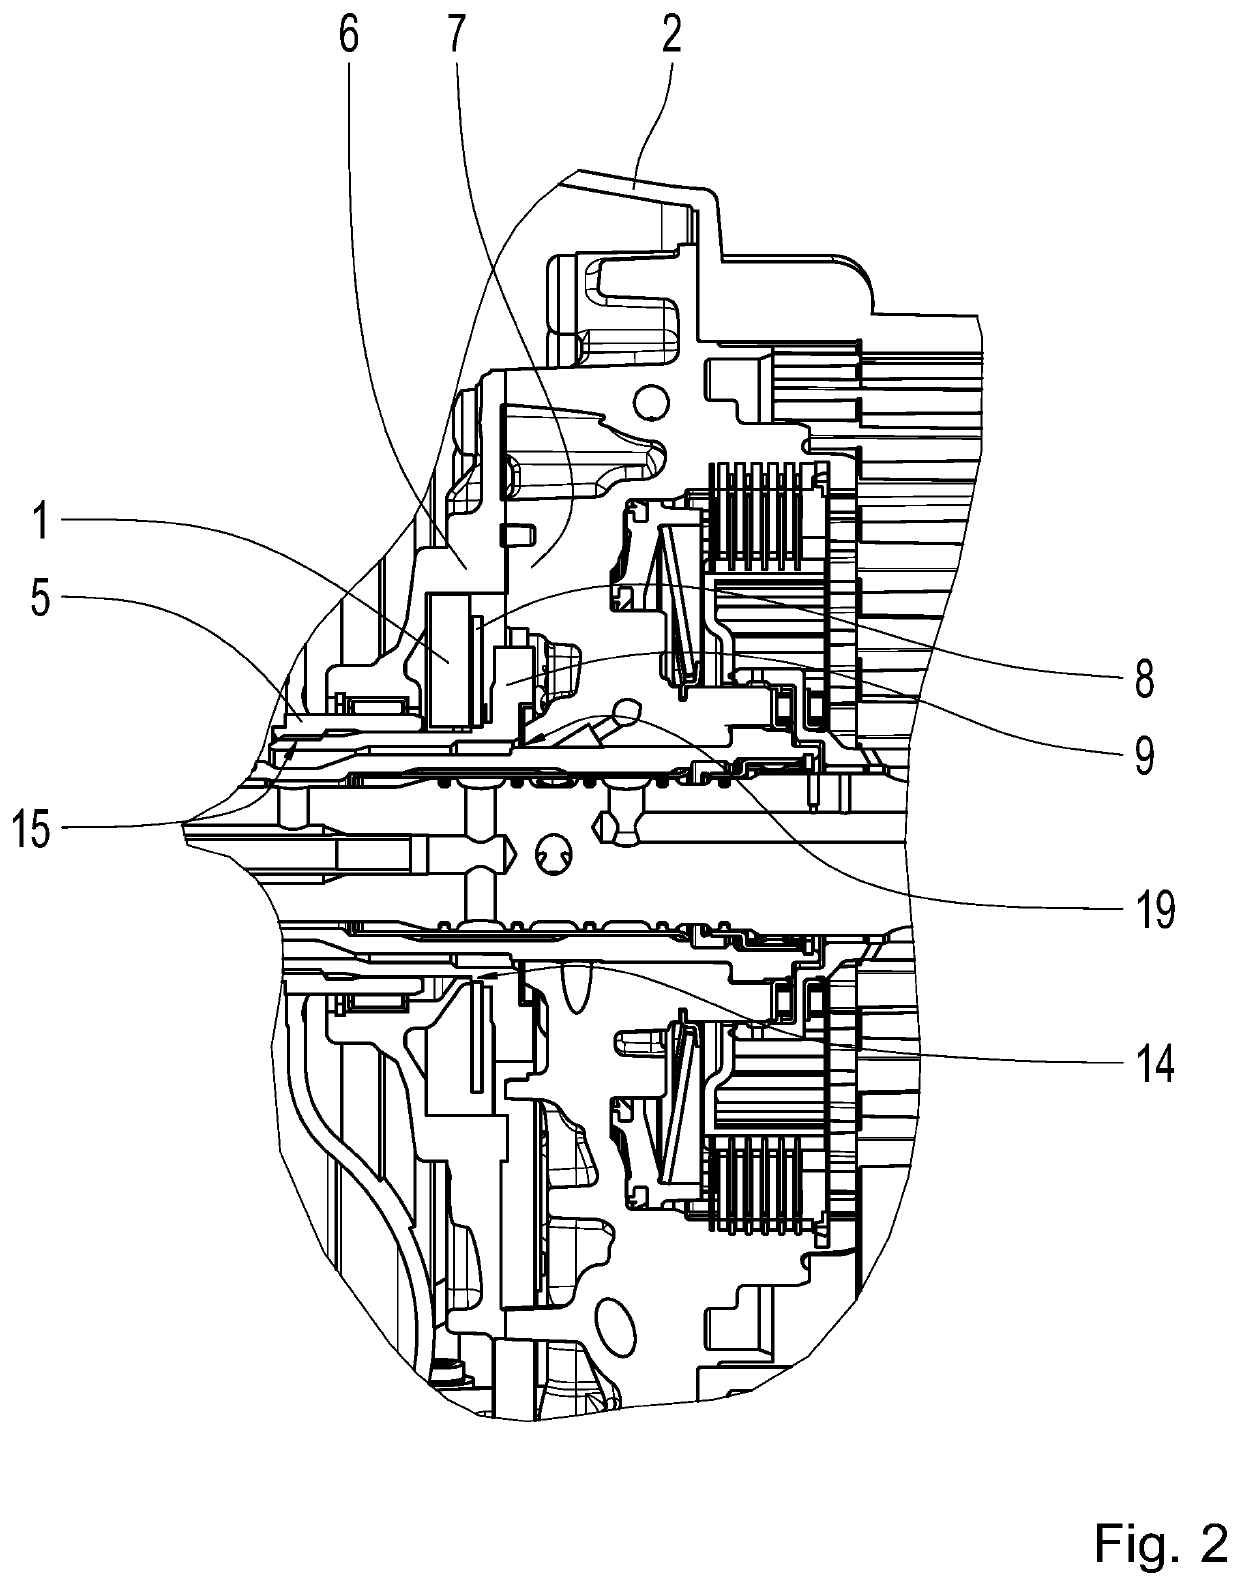 Arrangement of a Rotor Position Sensor